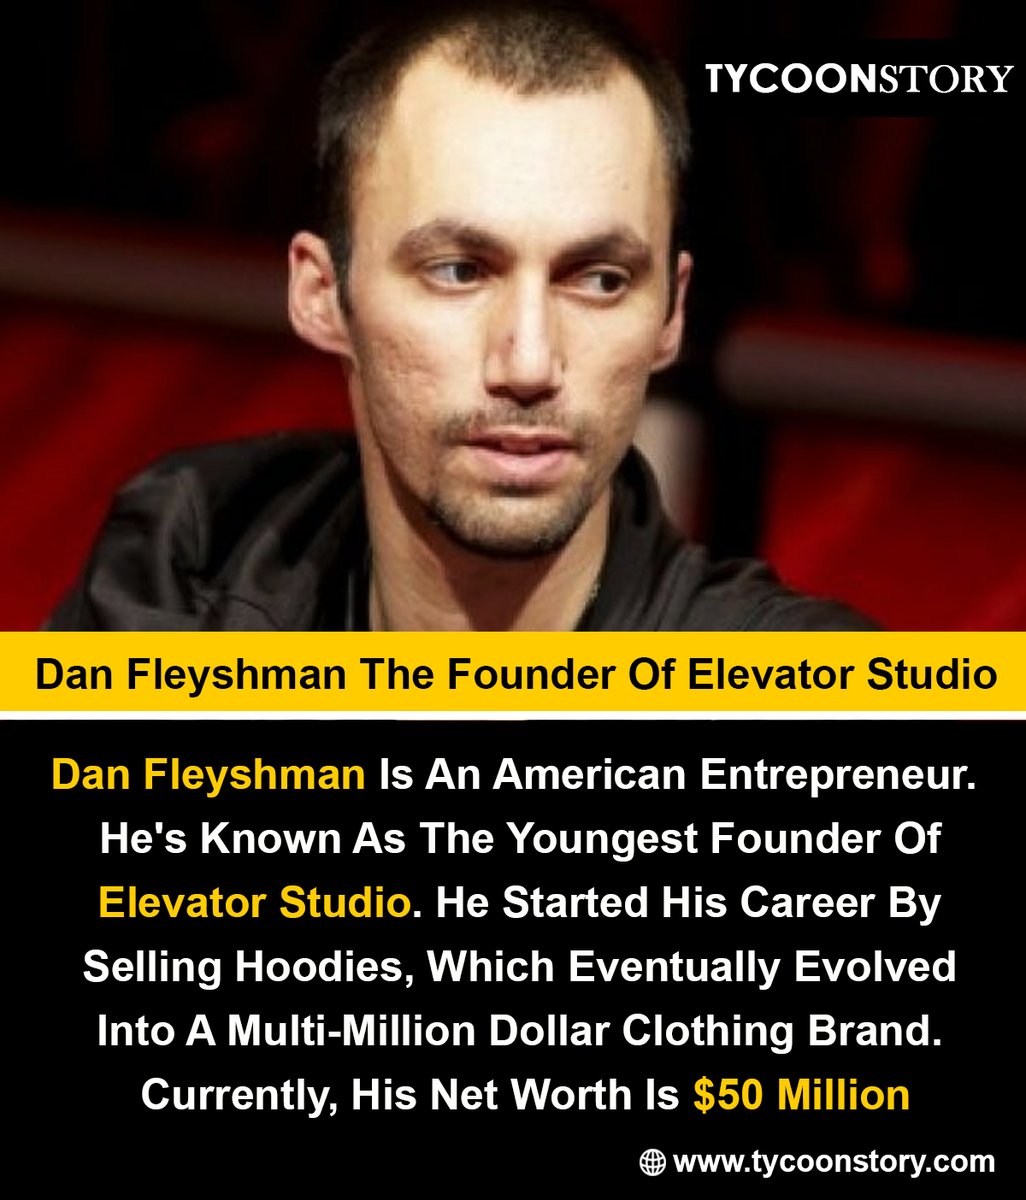 Dan Fleyshman The Founder Of Elevator Studio

#DanFleyshman #ElevatorStudio #Entrepreneurship #BusinessVentures #StartupLife #MarketingGuru #InnovationHub #SuccessStories #InspiringLeaders #CreativeEntrepreneur #DigitalMarketing 
@ElevatorStudios 

tycoonstory.com